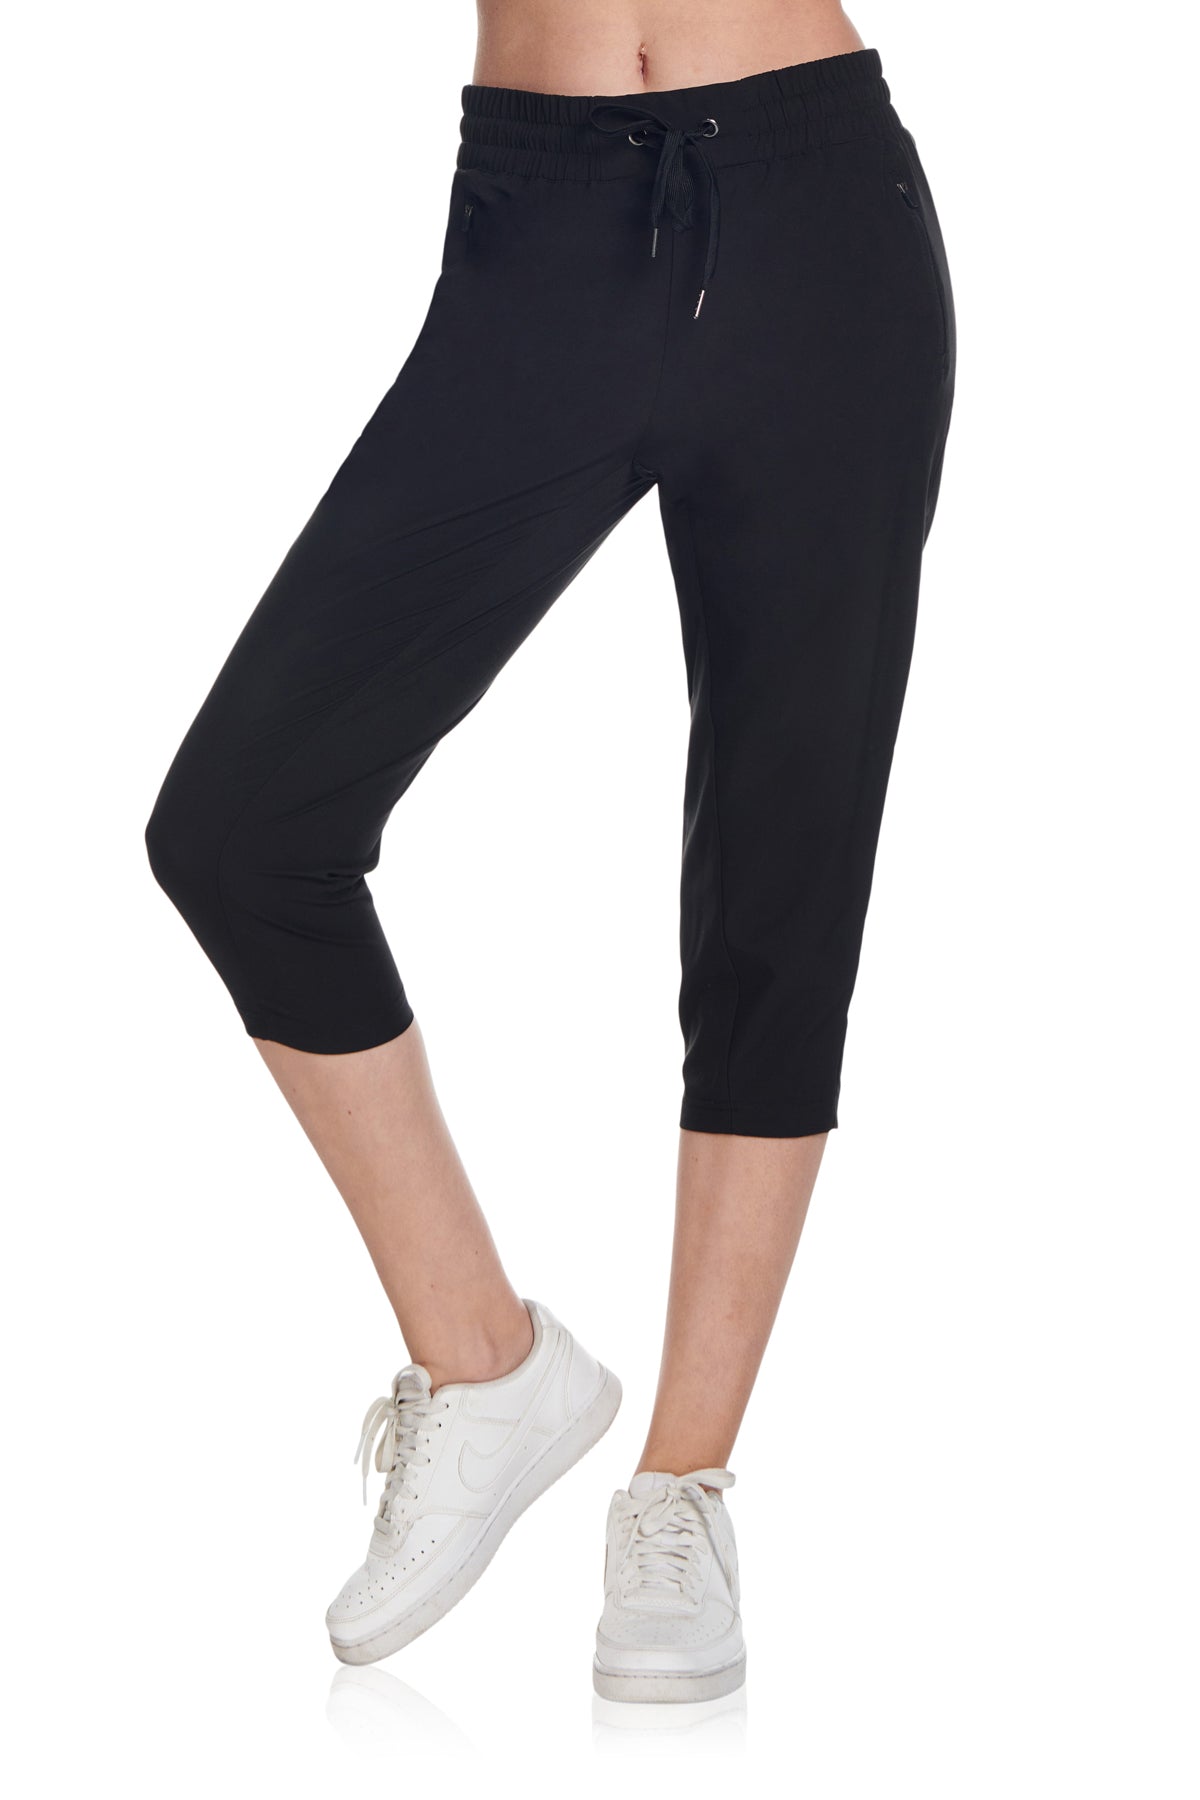 NWT $58 Women's KYODAN SLIMMING Solid Black Yoga Athletic Capri Pants Size  SMALL